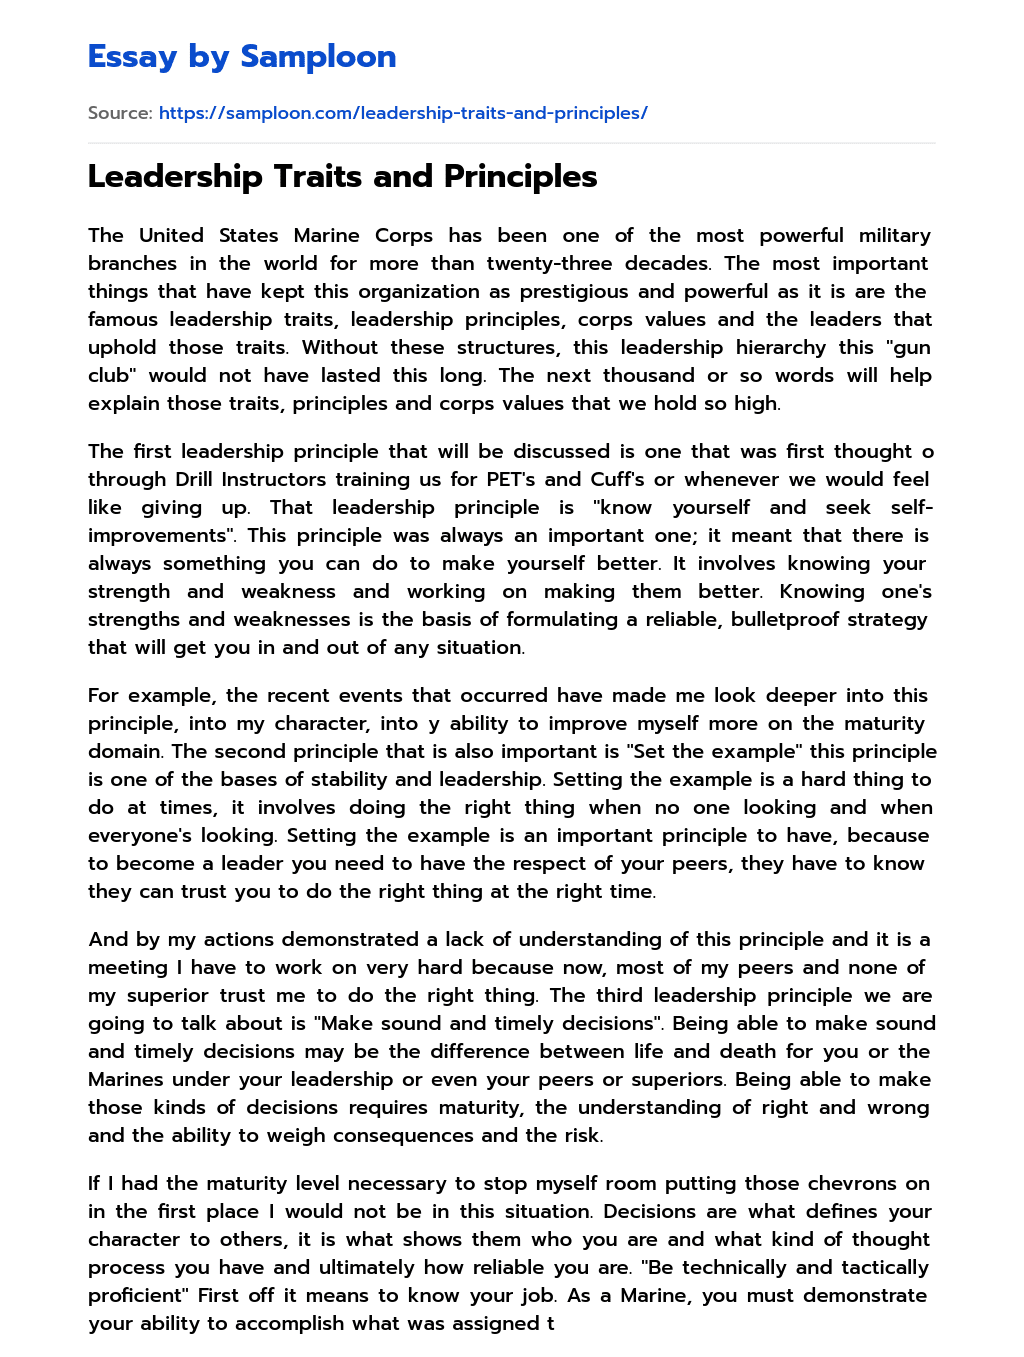 Leadership Traits and Principles essay